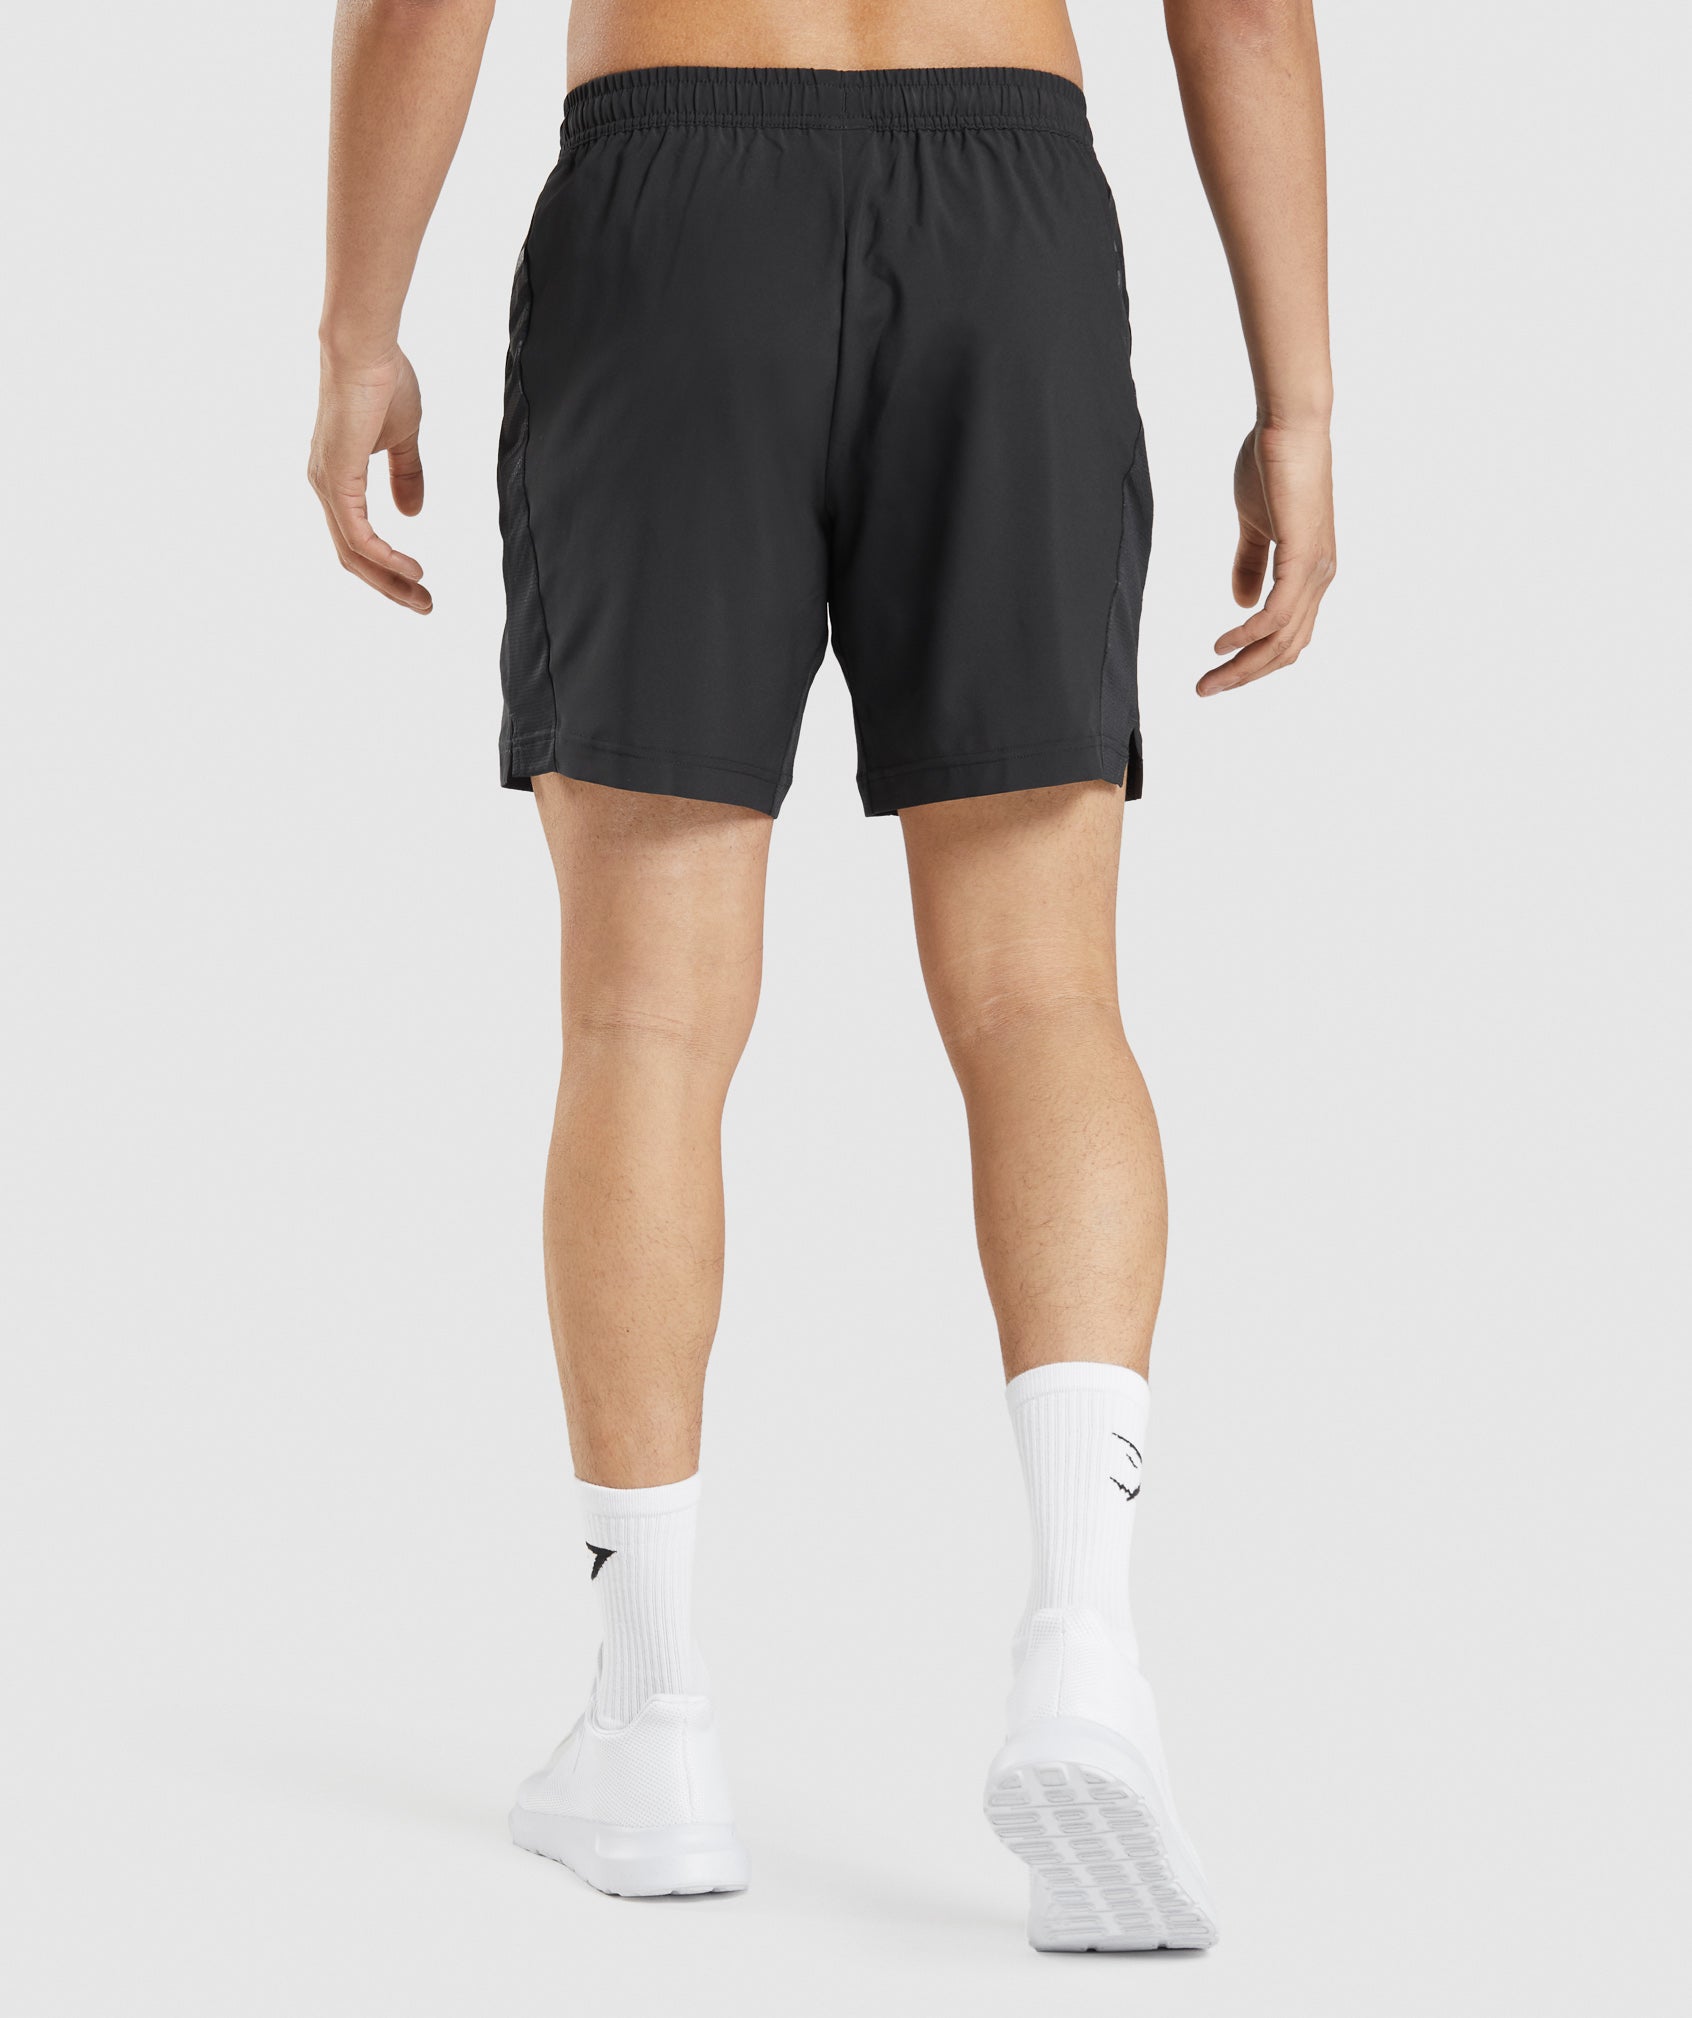 Sport Stripe 7" Shorts in Black - view 2